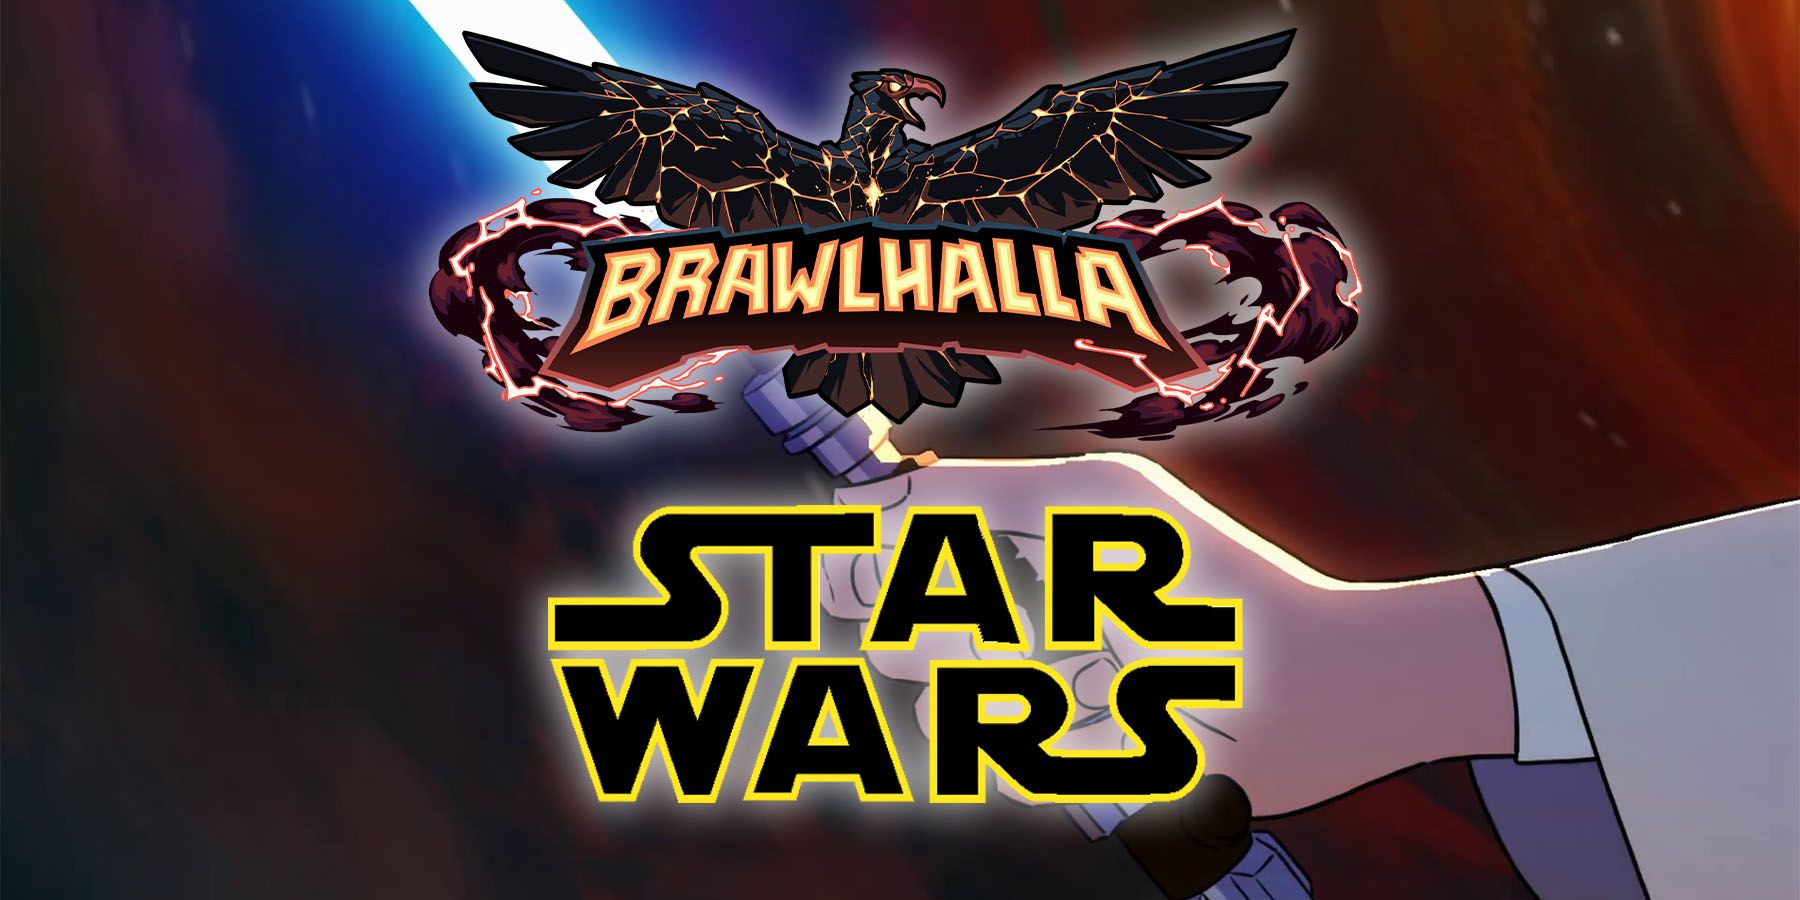 Brawlhalla Star Wars 2